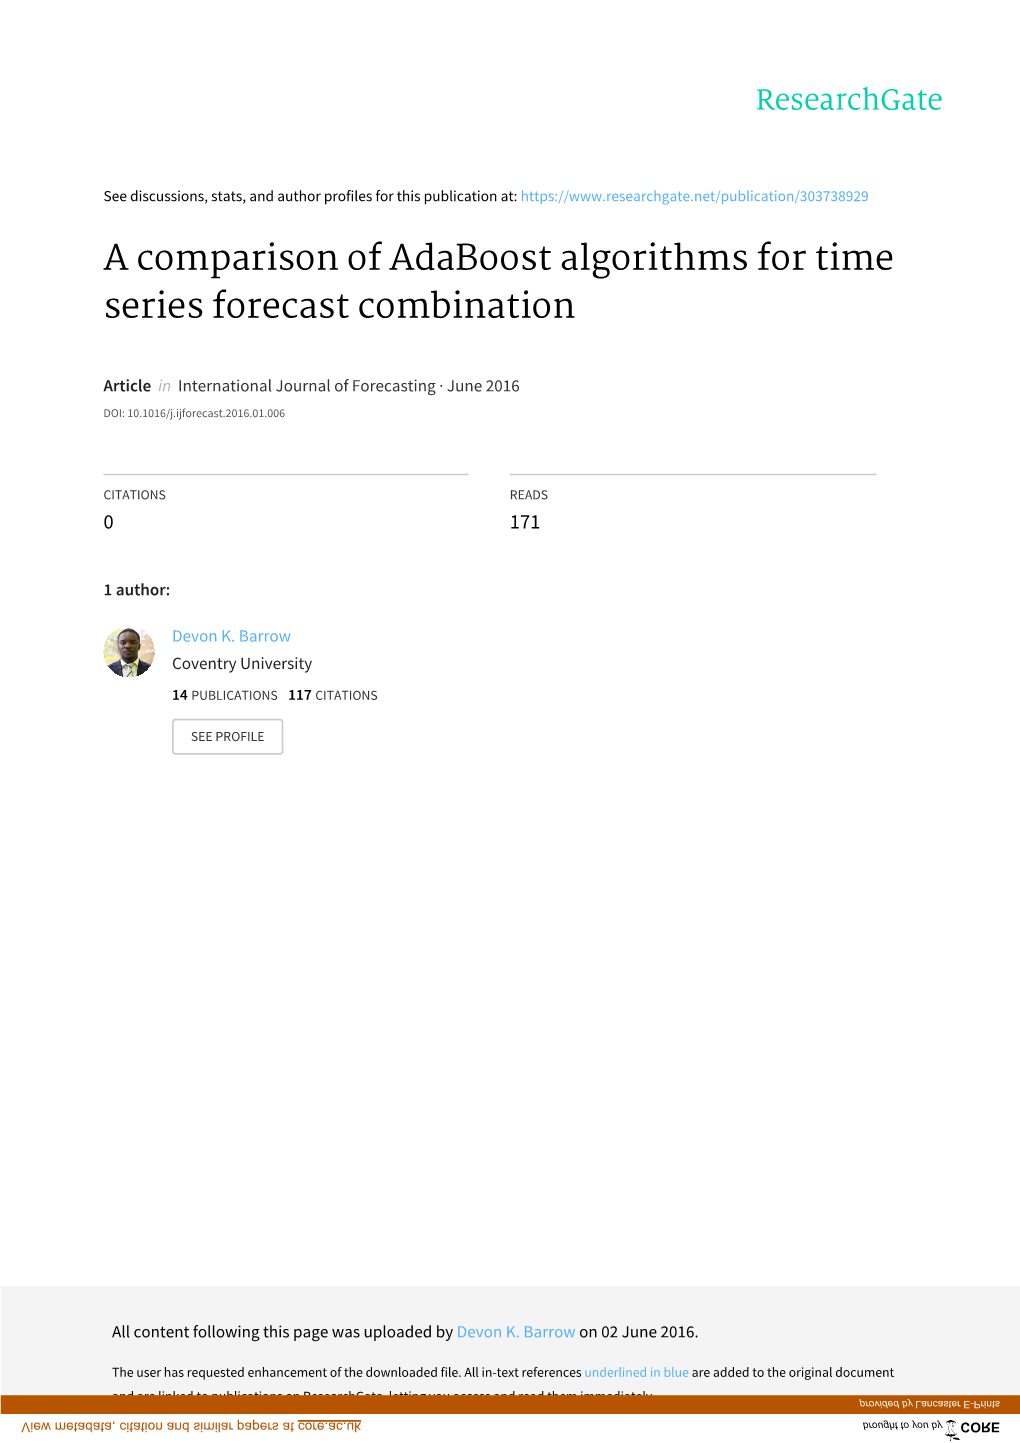 A Comparison of Adaboost Algorithms for Time Series Forecast Combination